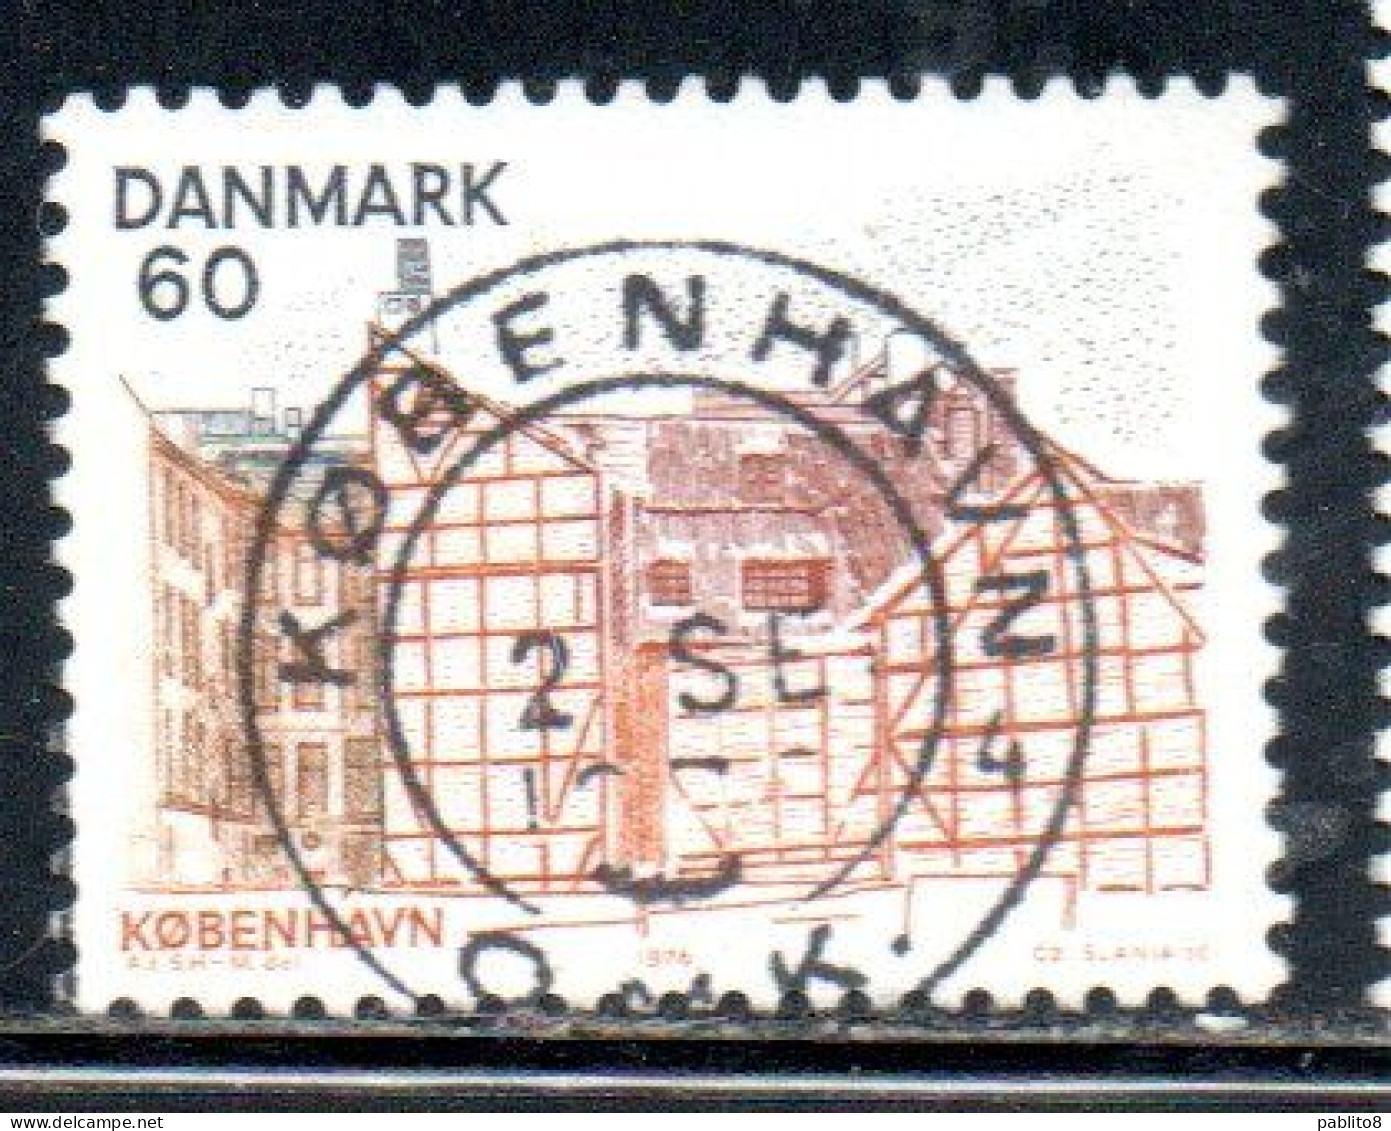 DANEMARK DANMARK DENMARK DANIMARCA 1976 COPENHAGEN VIEWS VIEW CENTER 60o USED USATO OBLITERE - Used Stamps